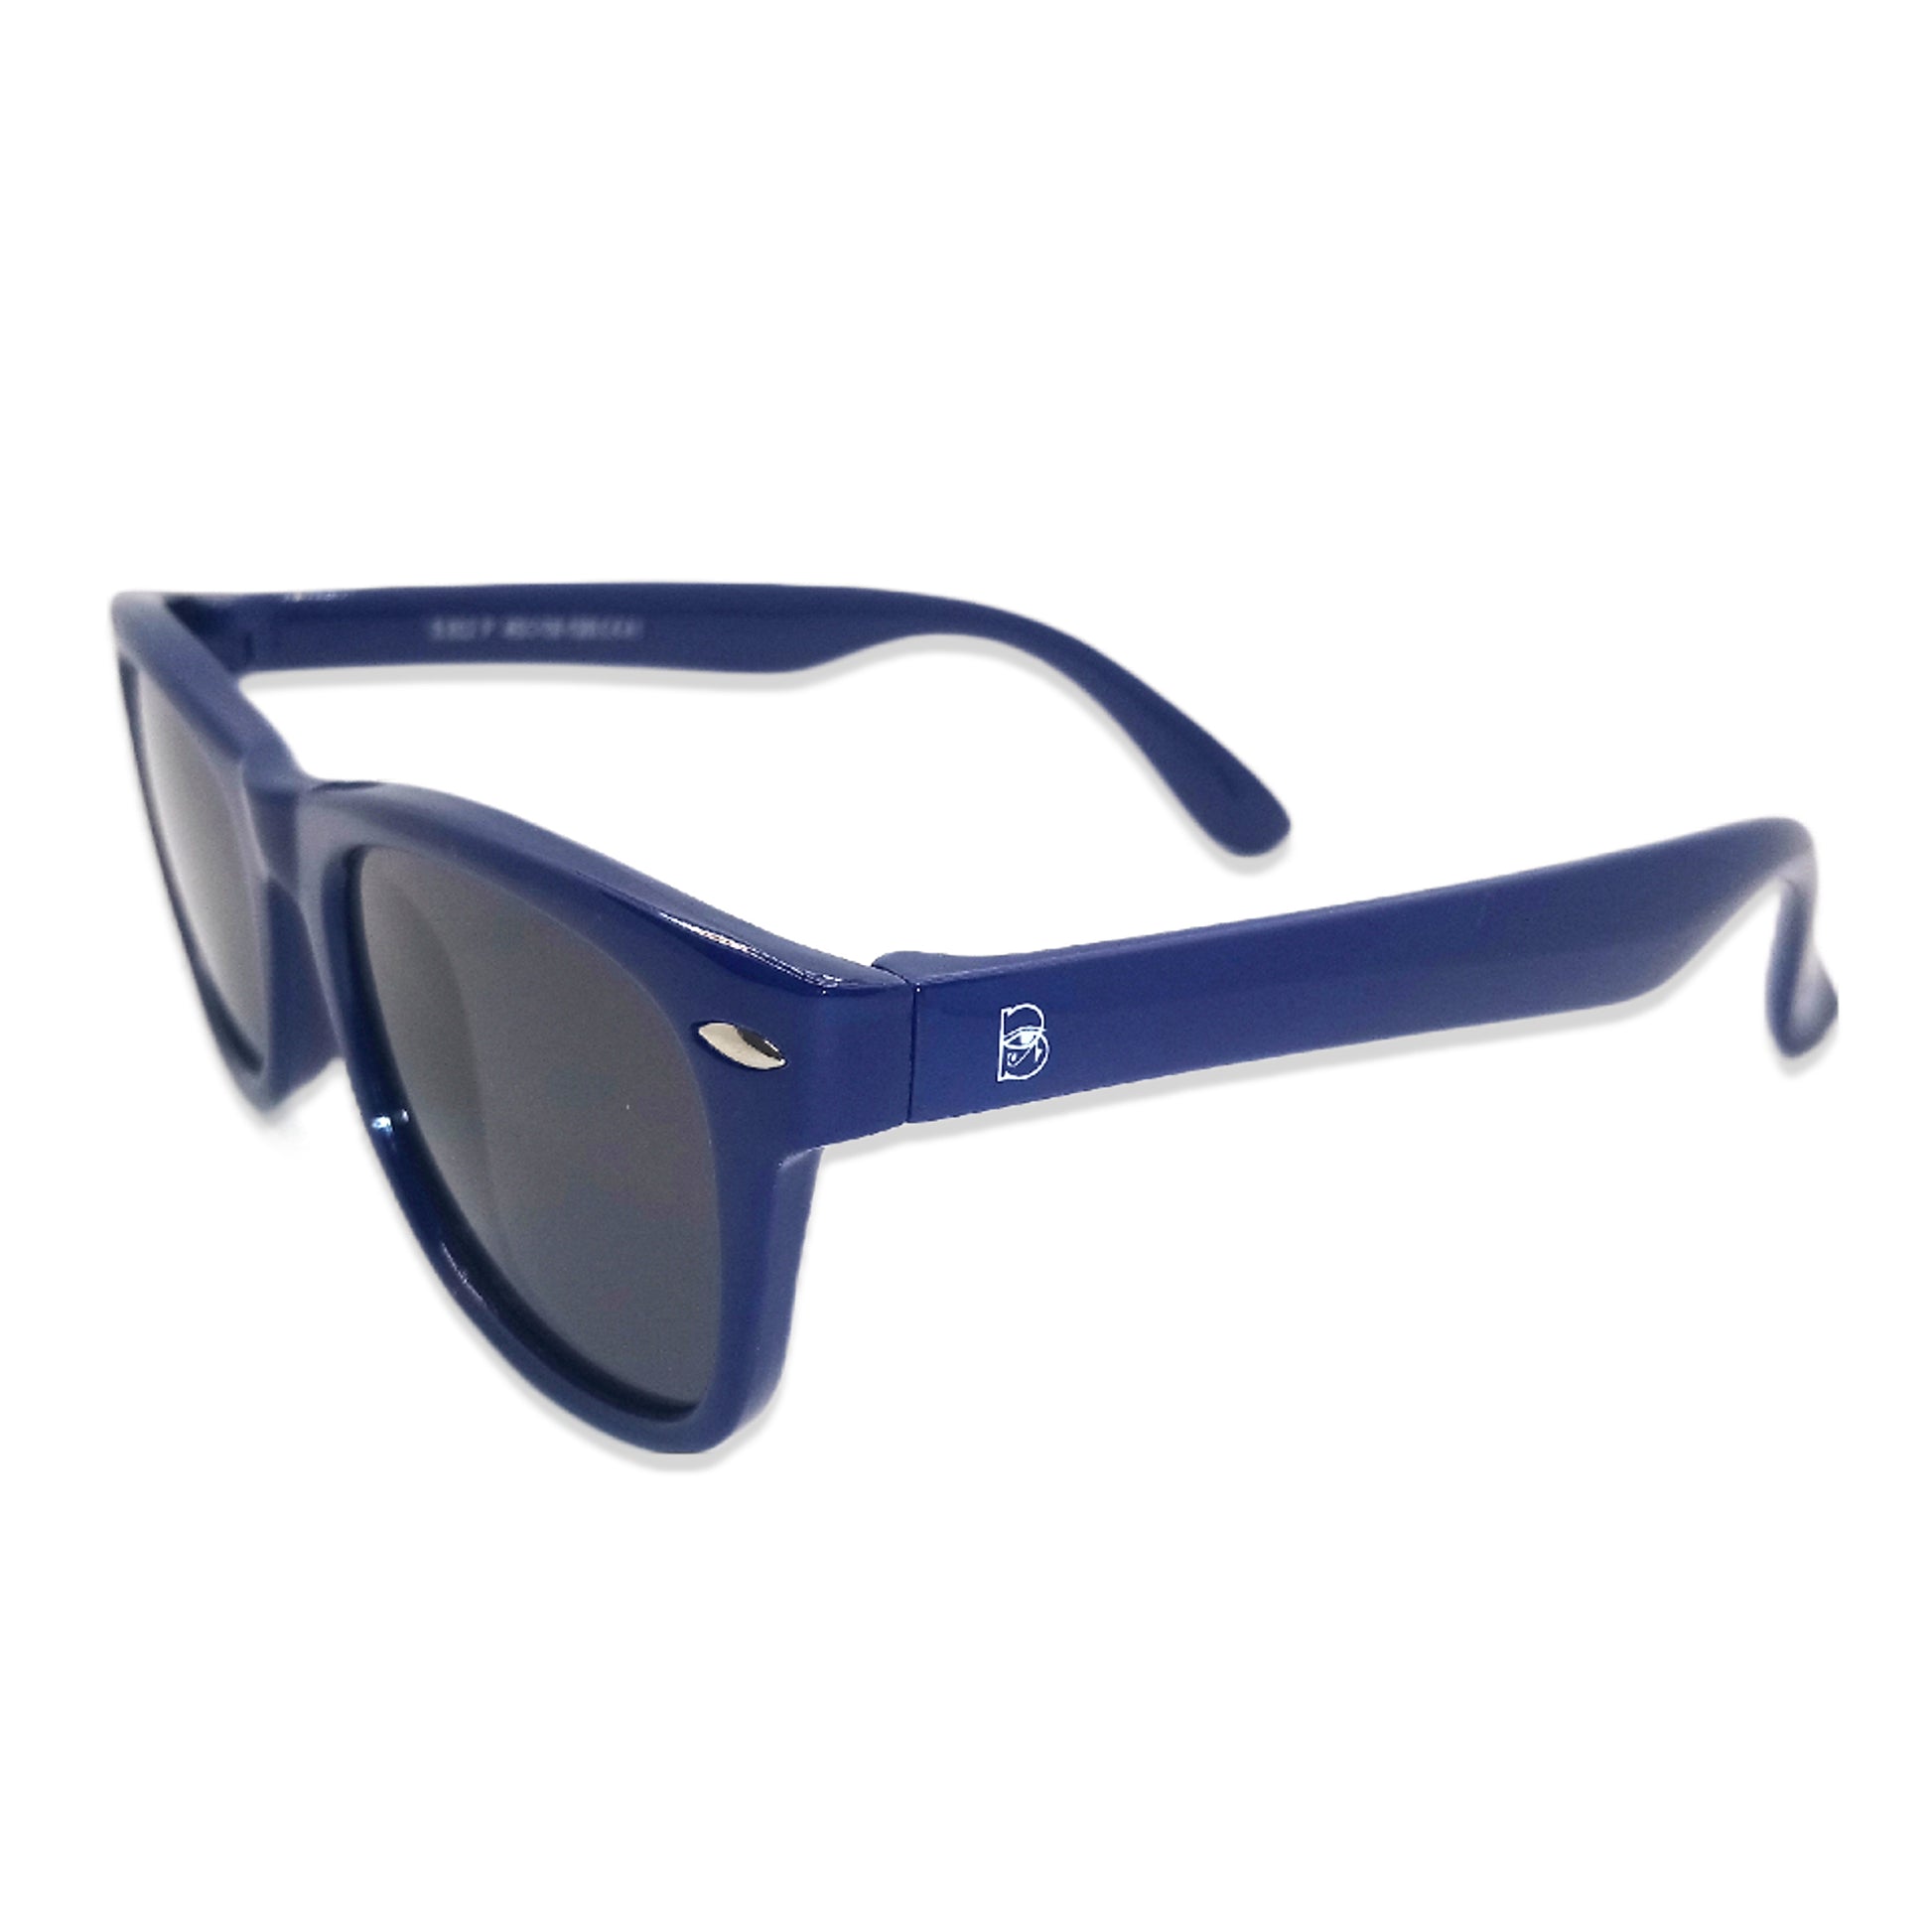 Bprotectedstore Flex Navy Blue Children Polarized Sunglasses - Stylish and Safe Eyewear for Children-Side